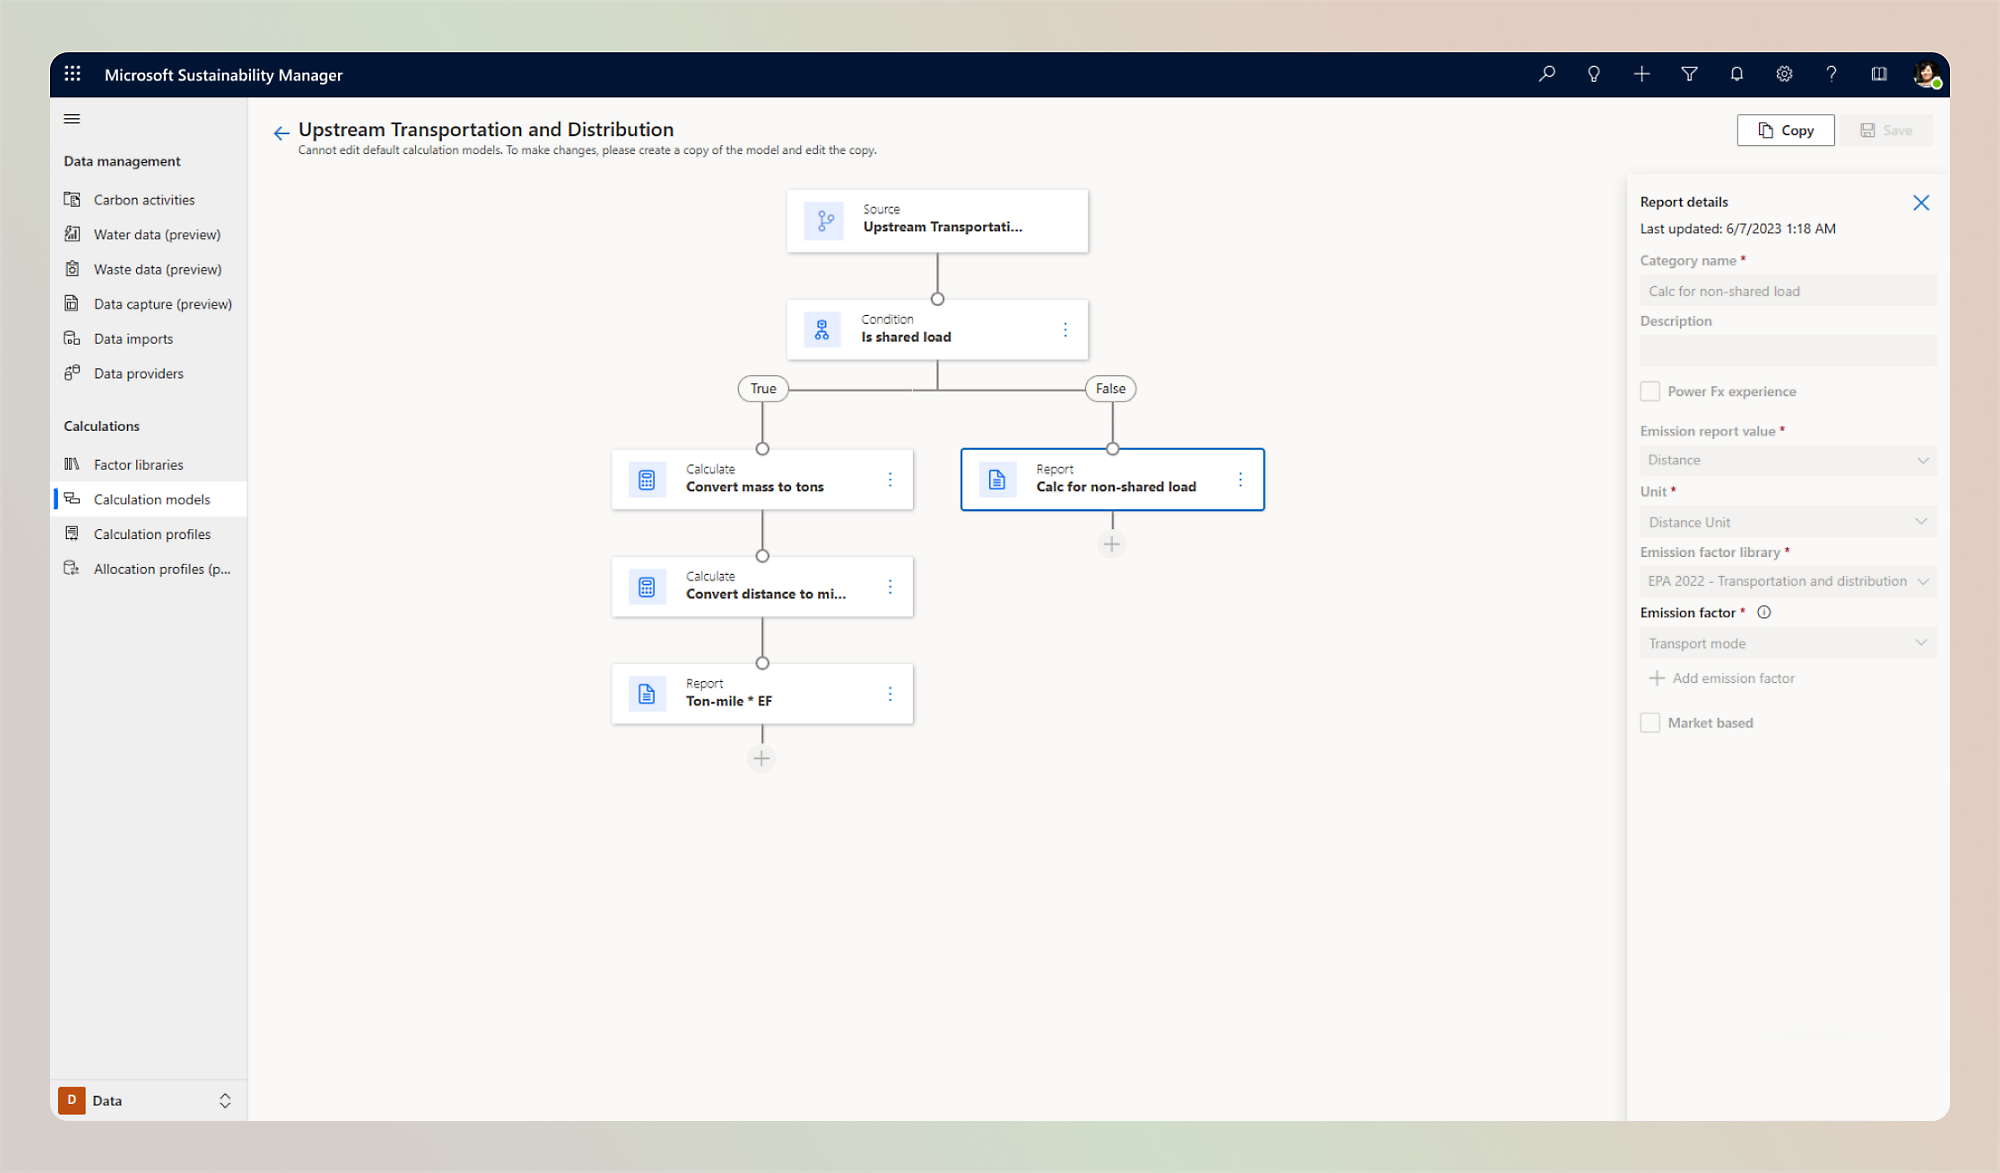 Microsoft Sustainability Manager 界面屏幕截图，其中显示了上游传输和分配流程图